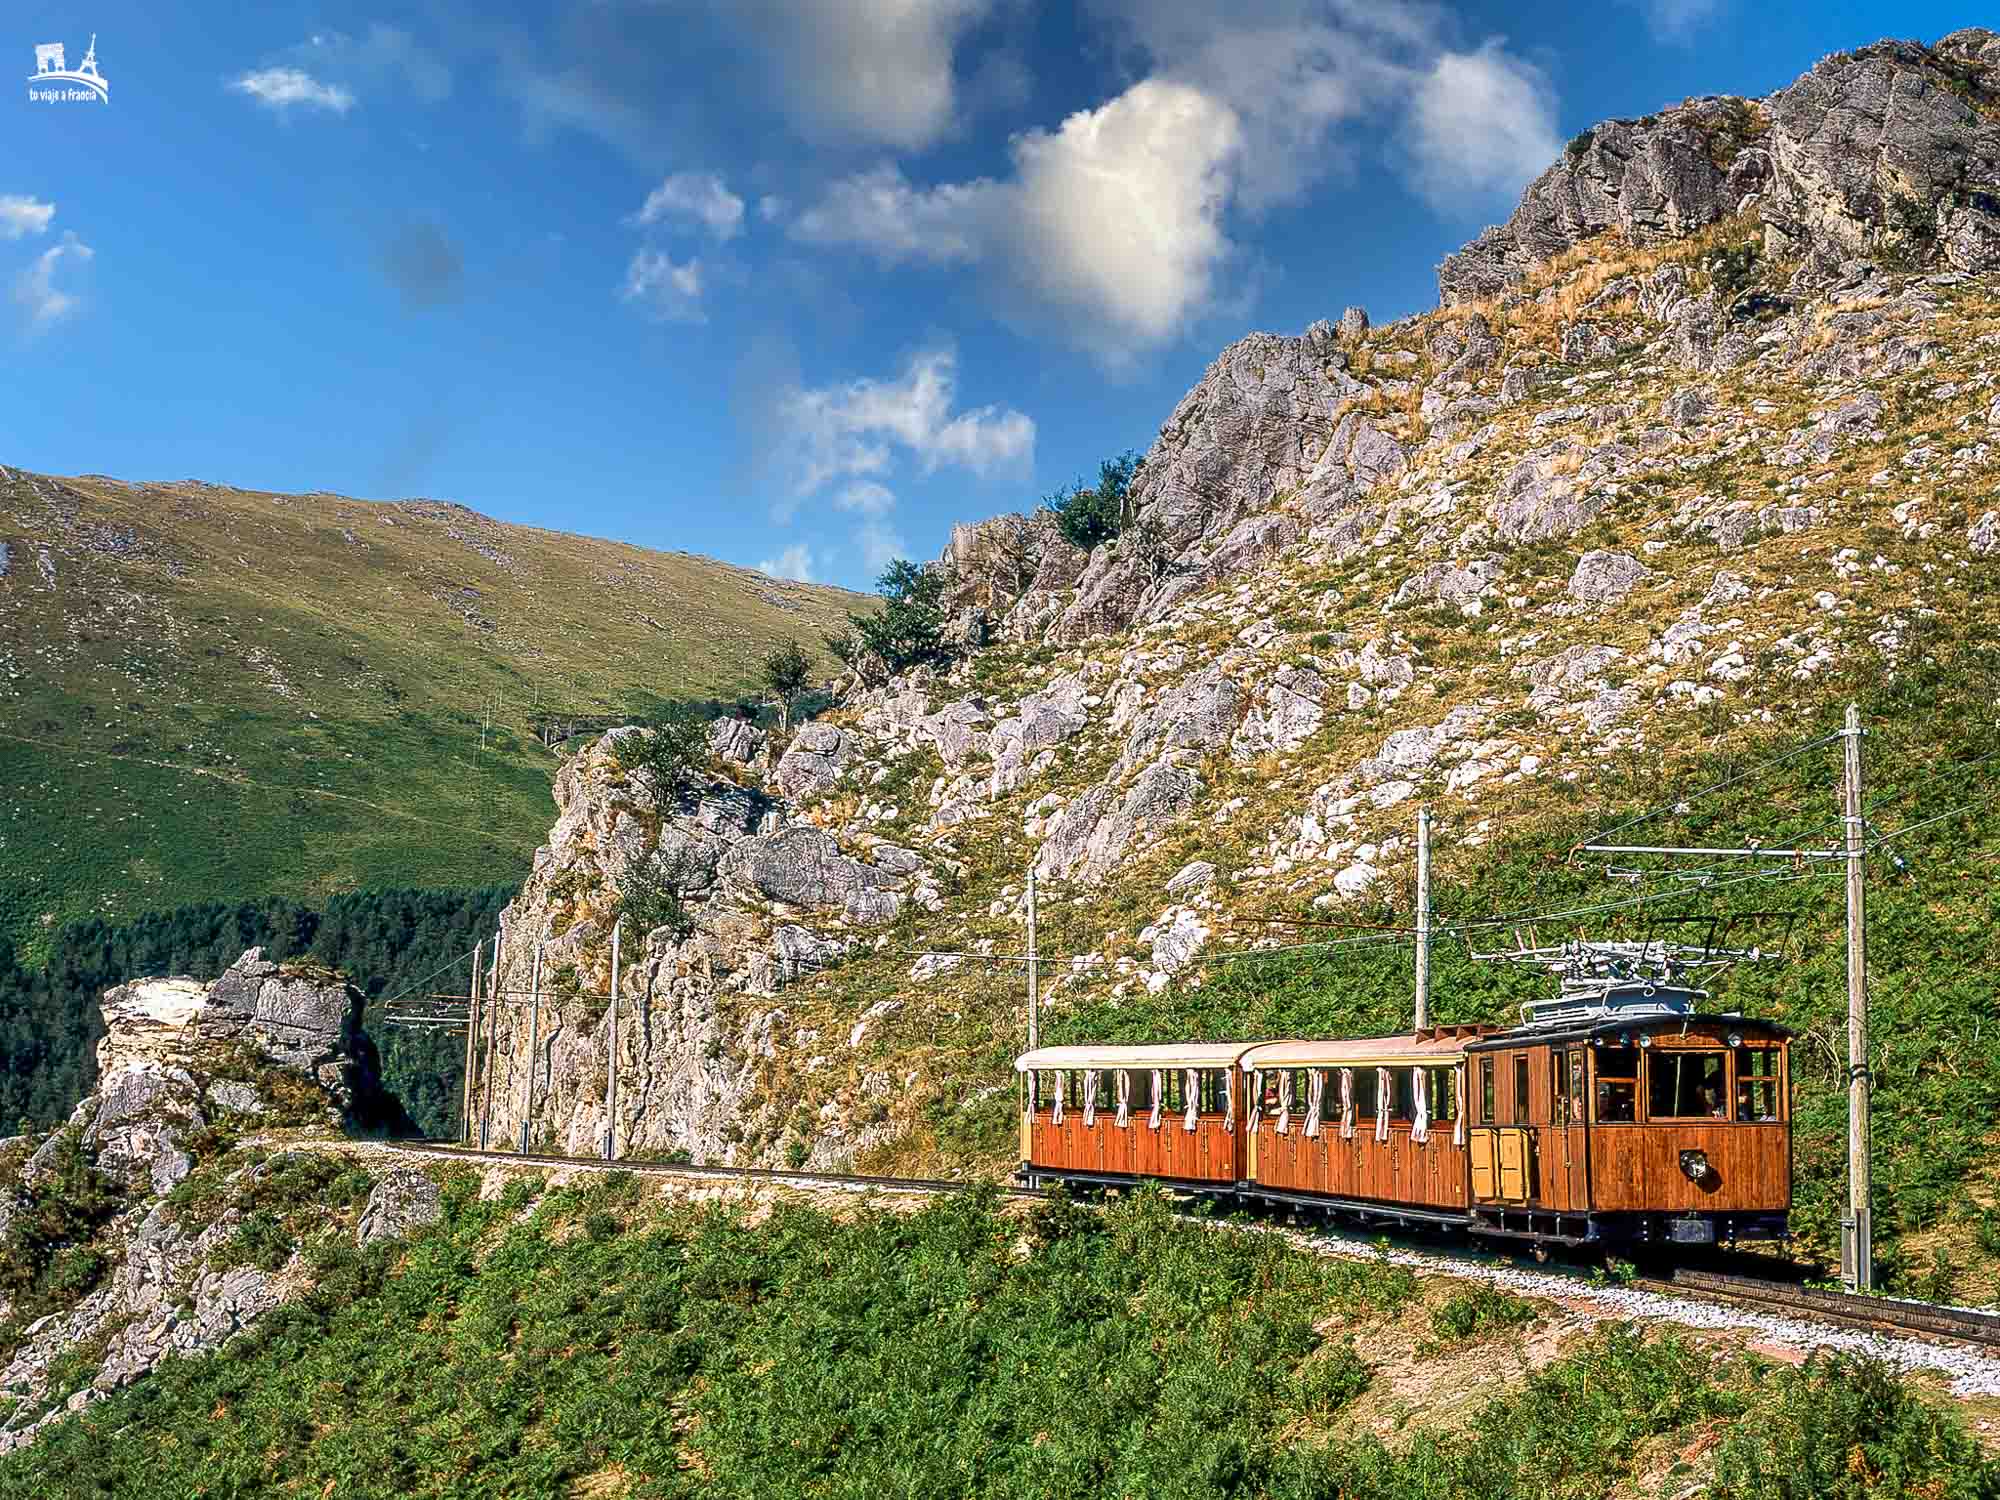 Tren de La Rhune, Qué ver en el País Vasco Francés